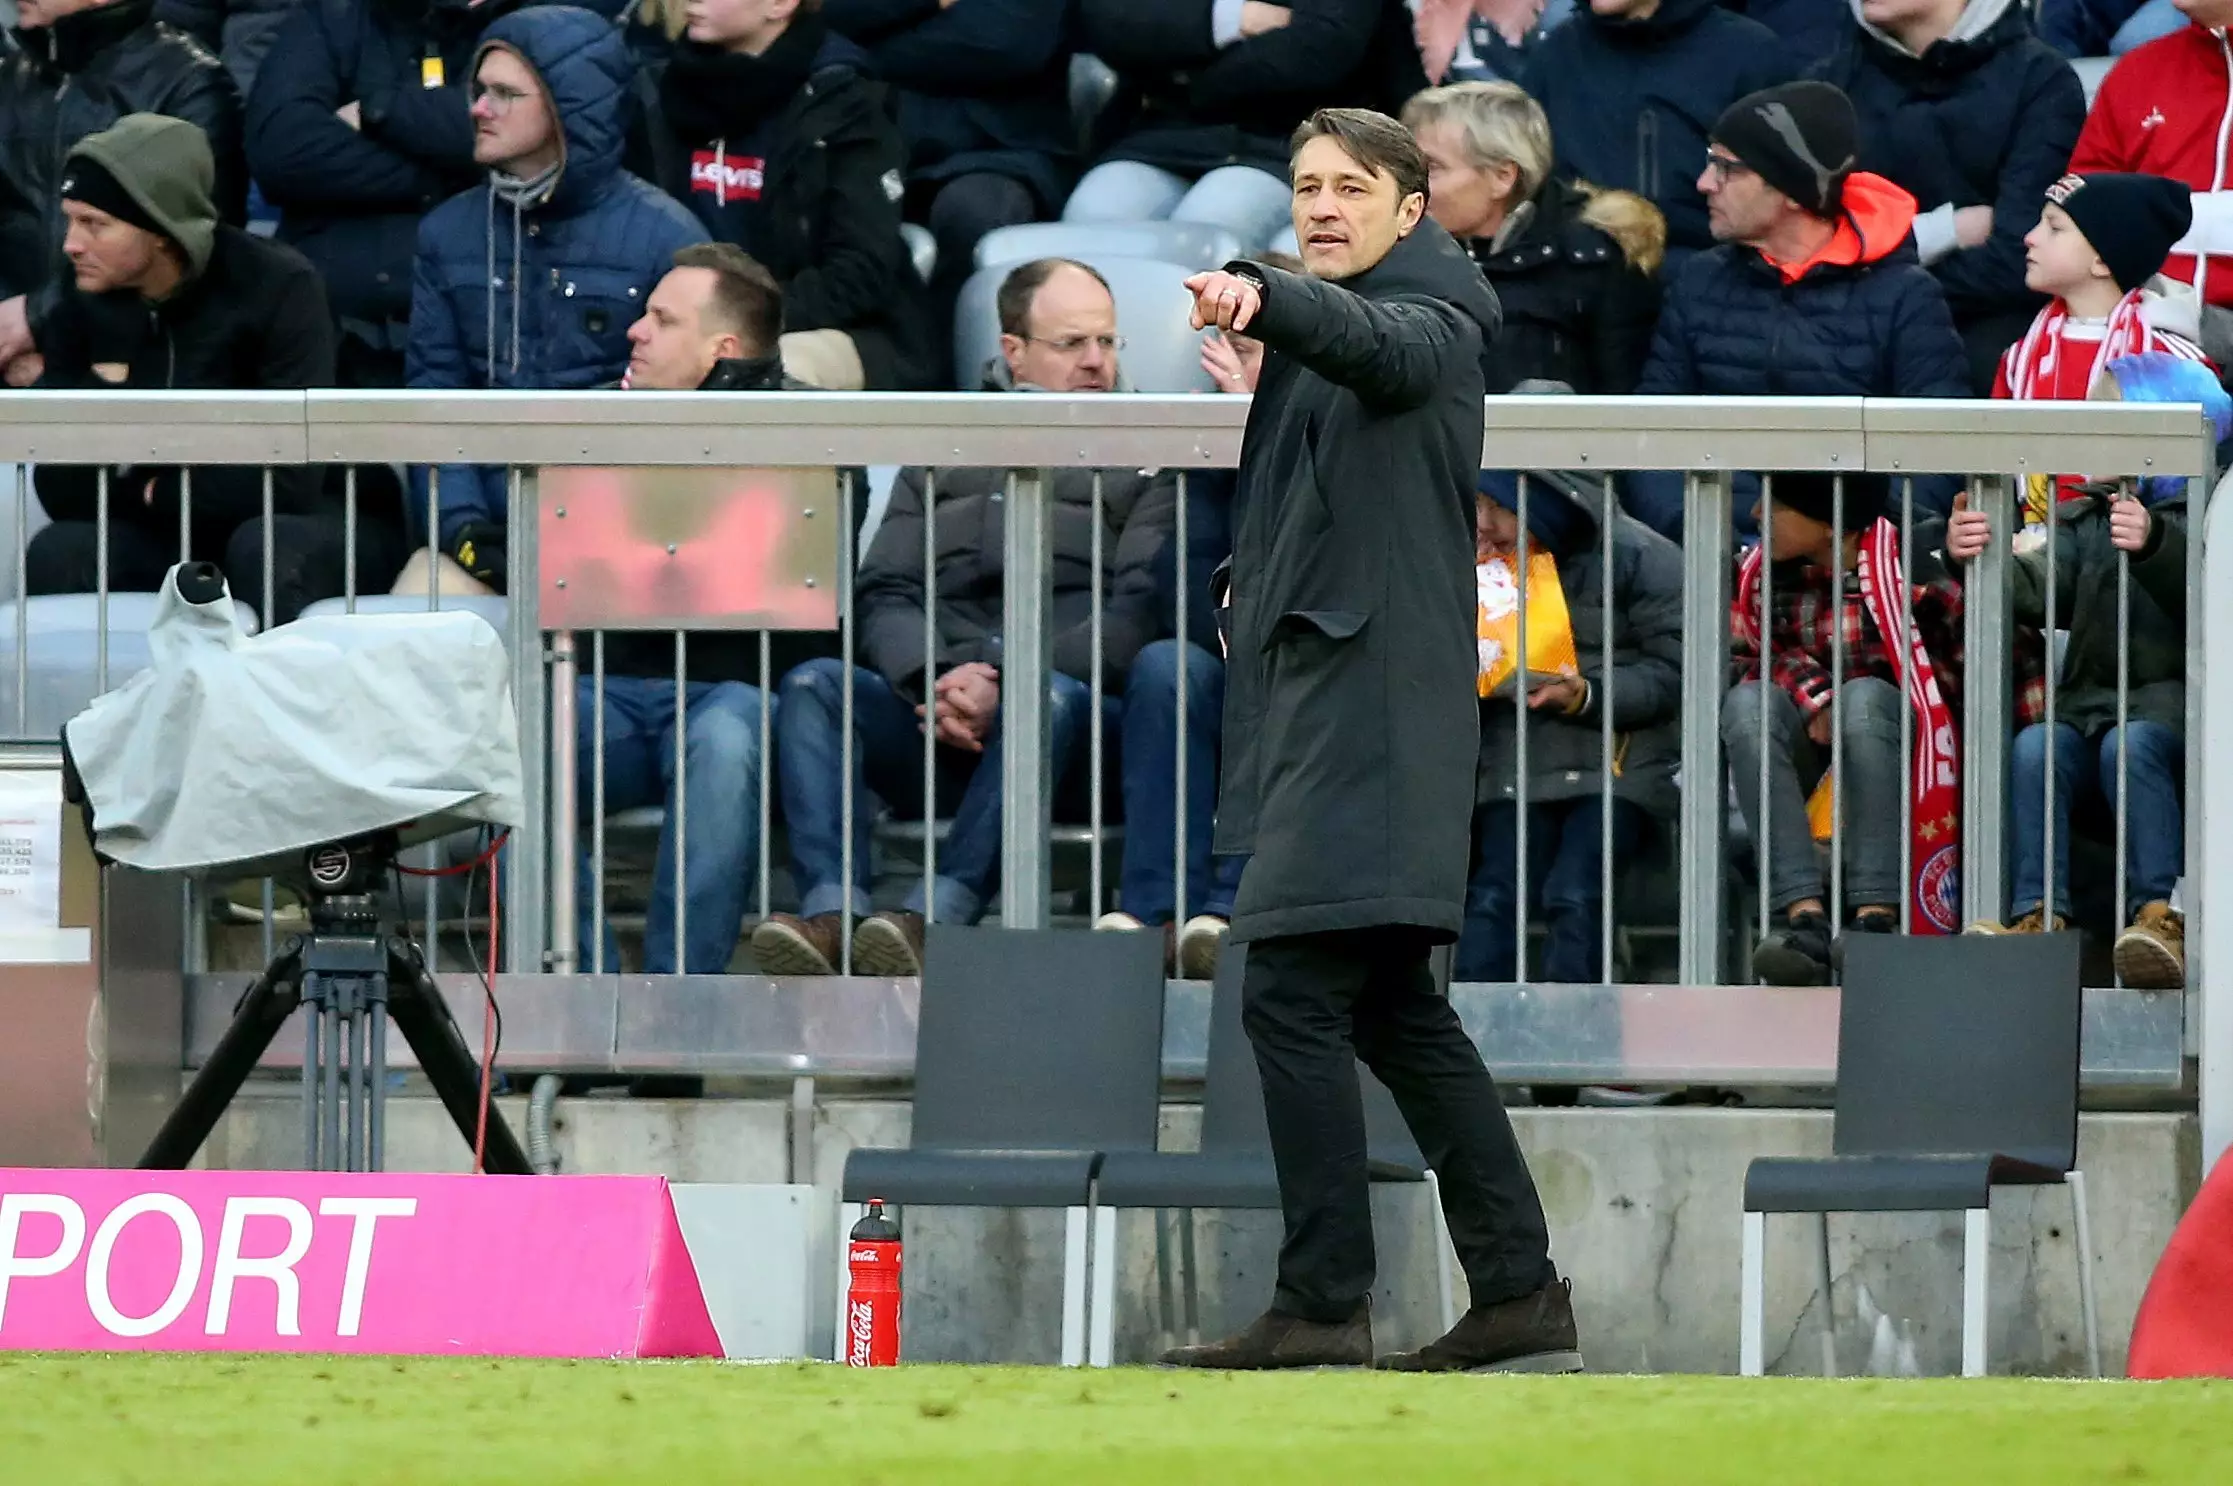 Kovac hasn't had a great start to life at Bayern. Image: PA Images